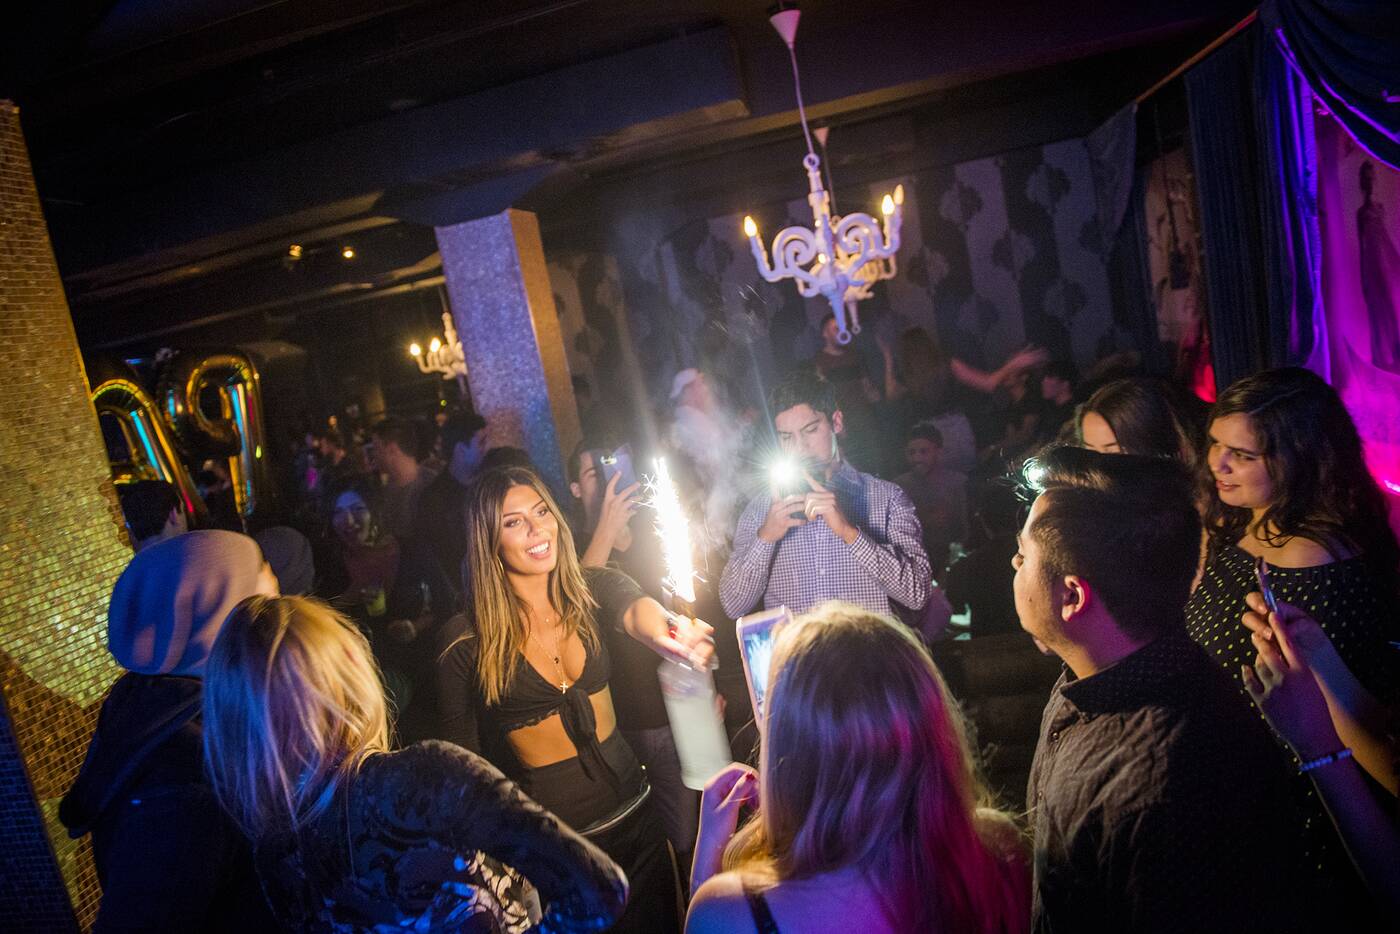 Latin nightclub brings the party Wednesday nights in Toronto